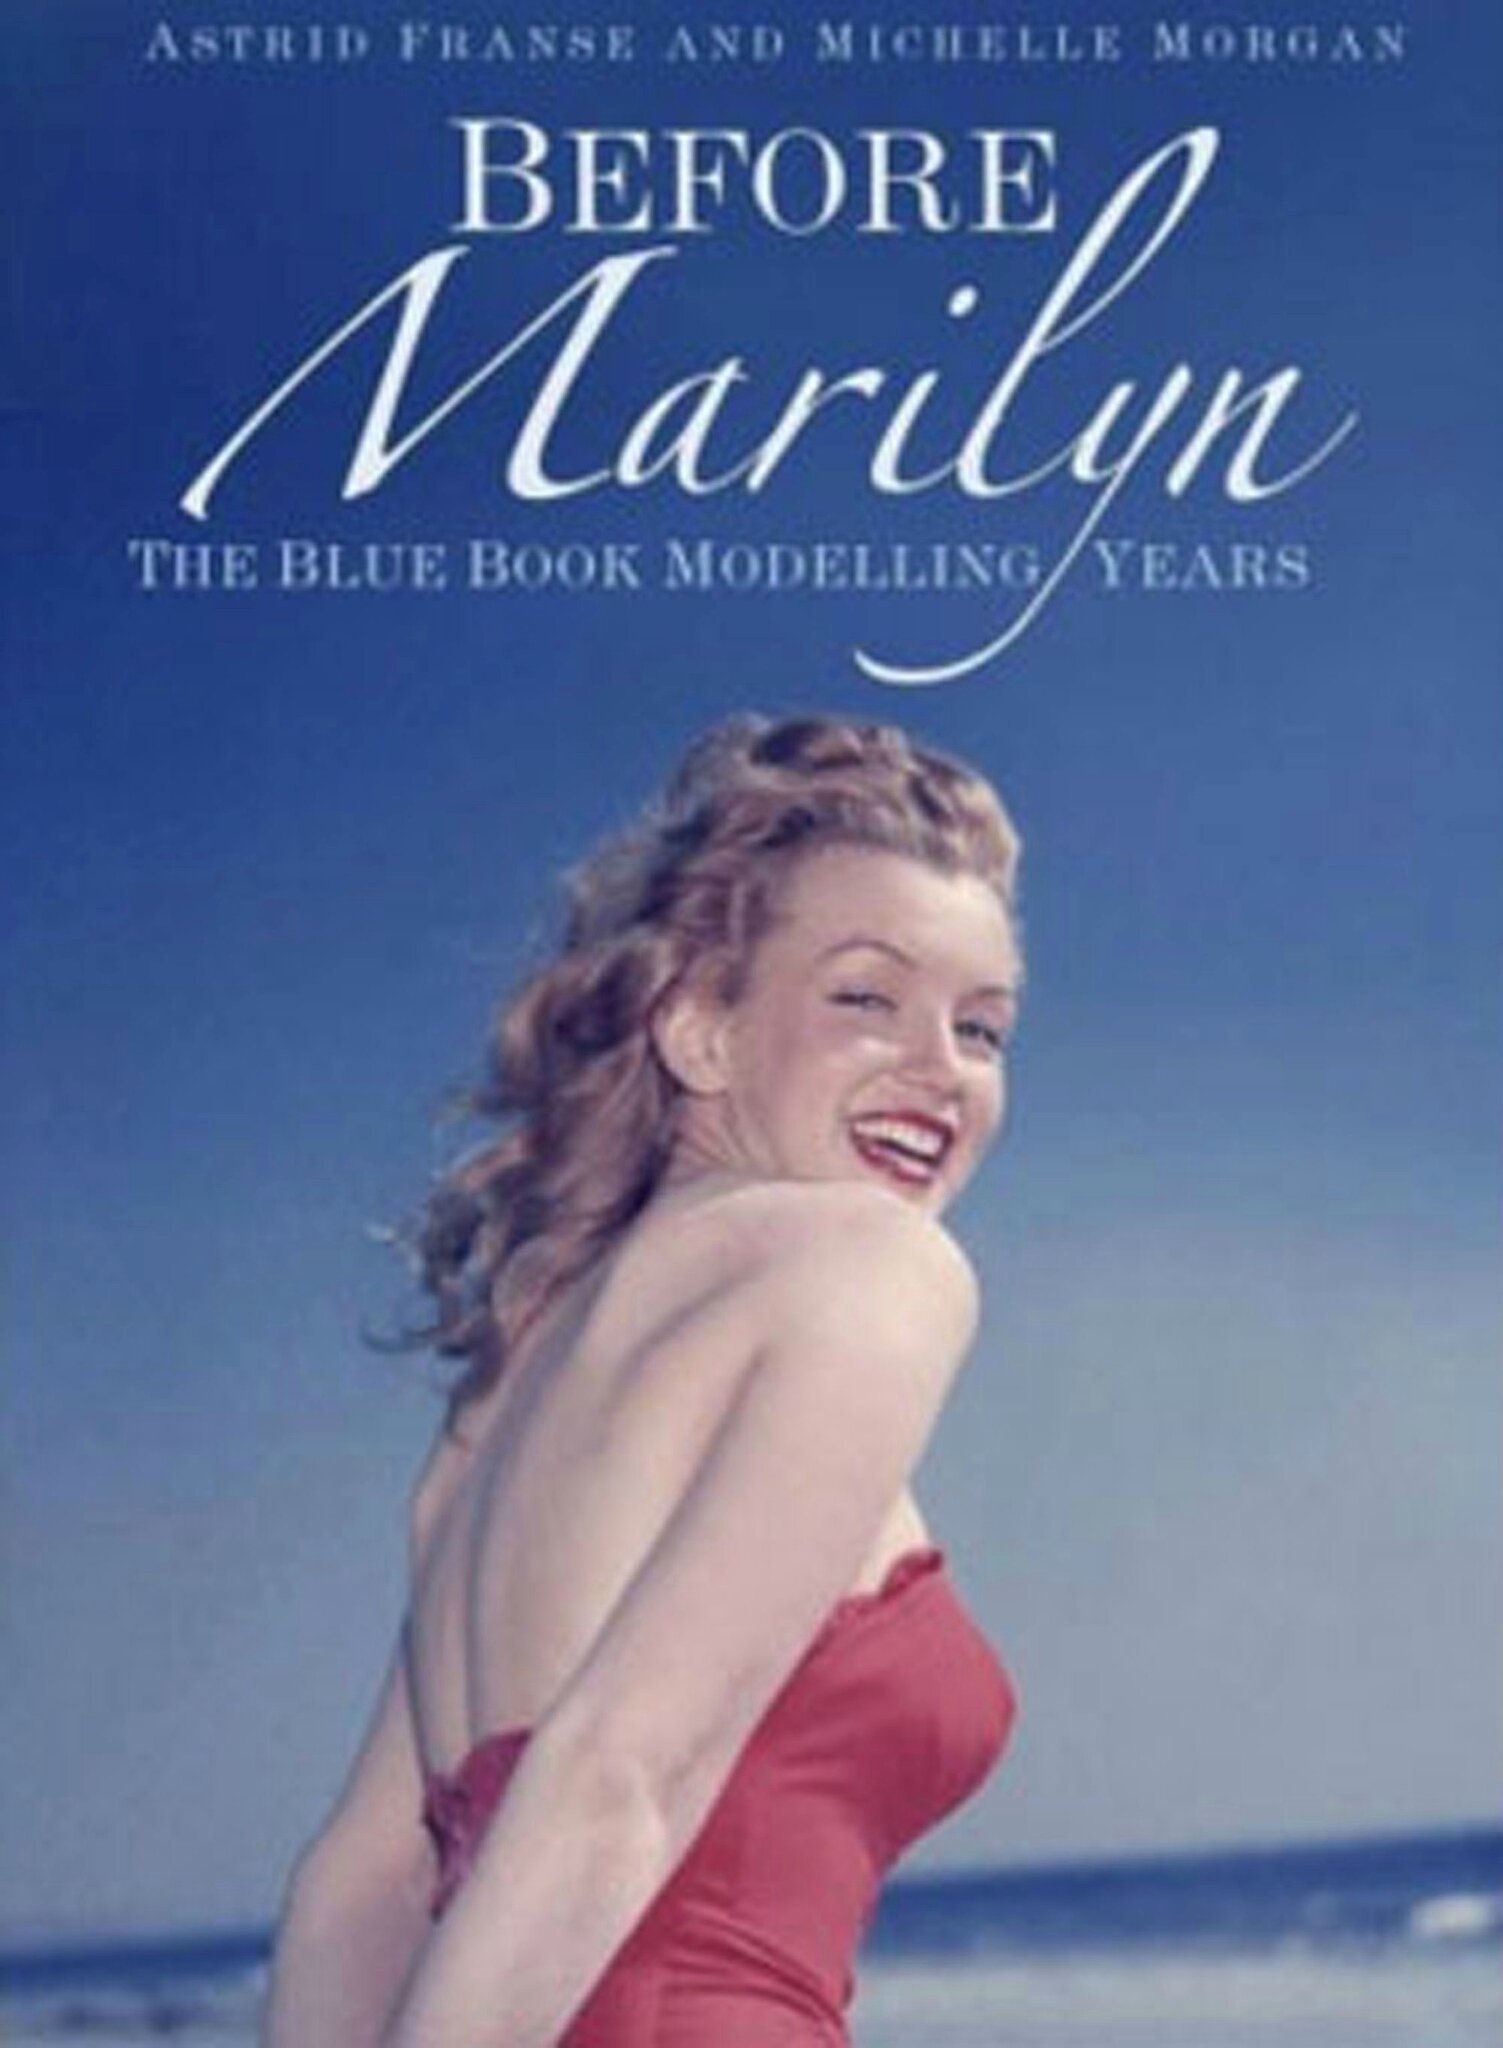 Marilyn Monroe: Beyond the Legend (TV Movie 1986) - IMDb